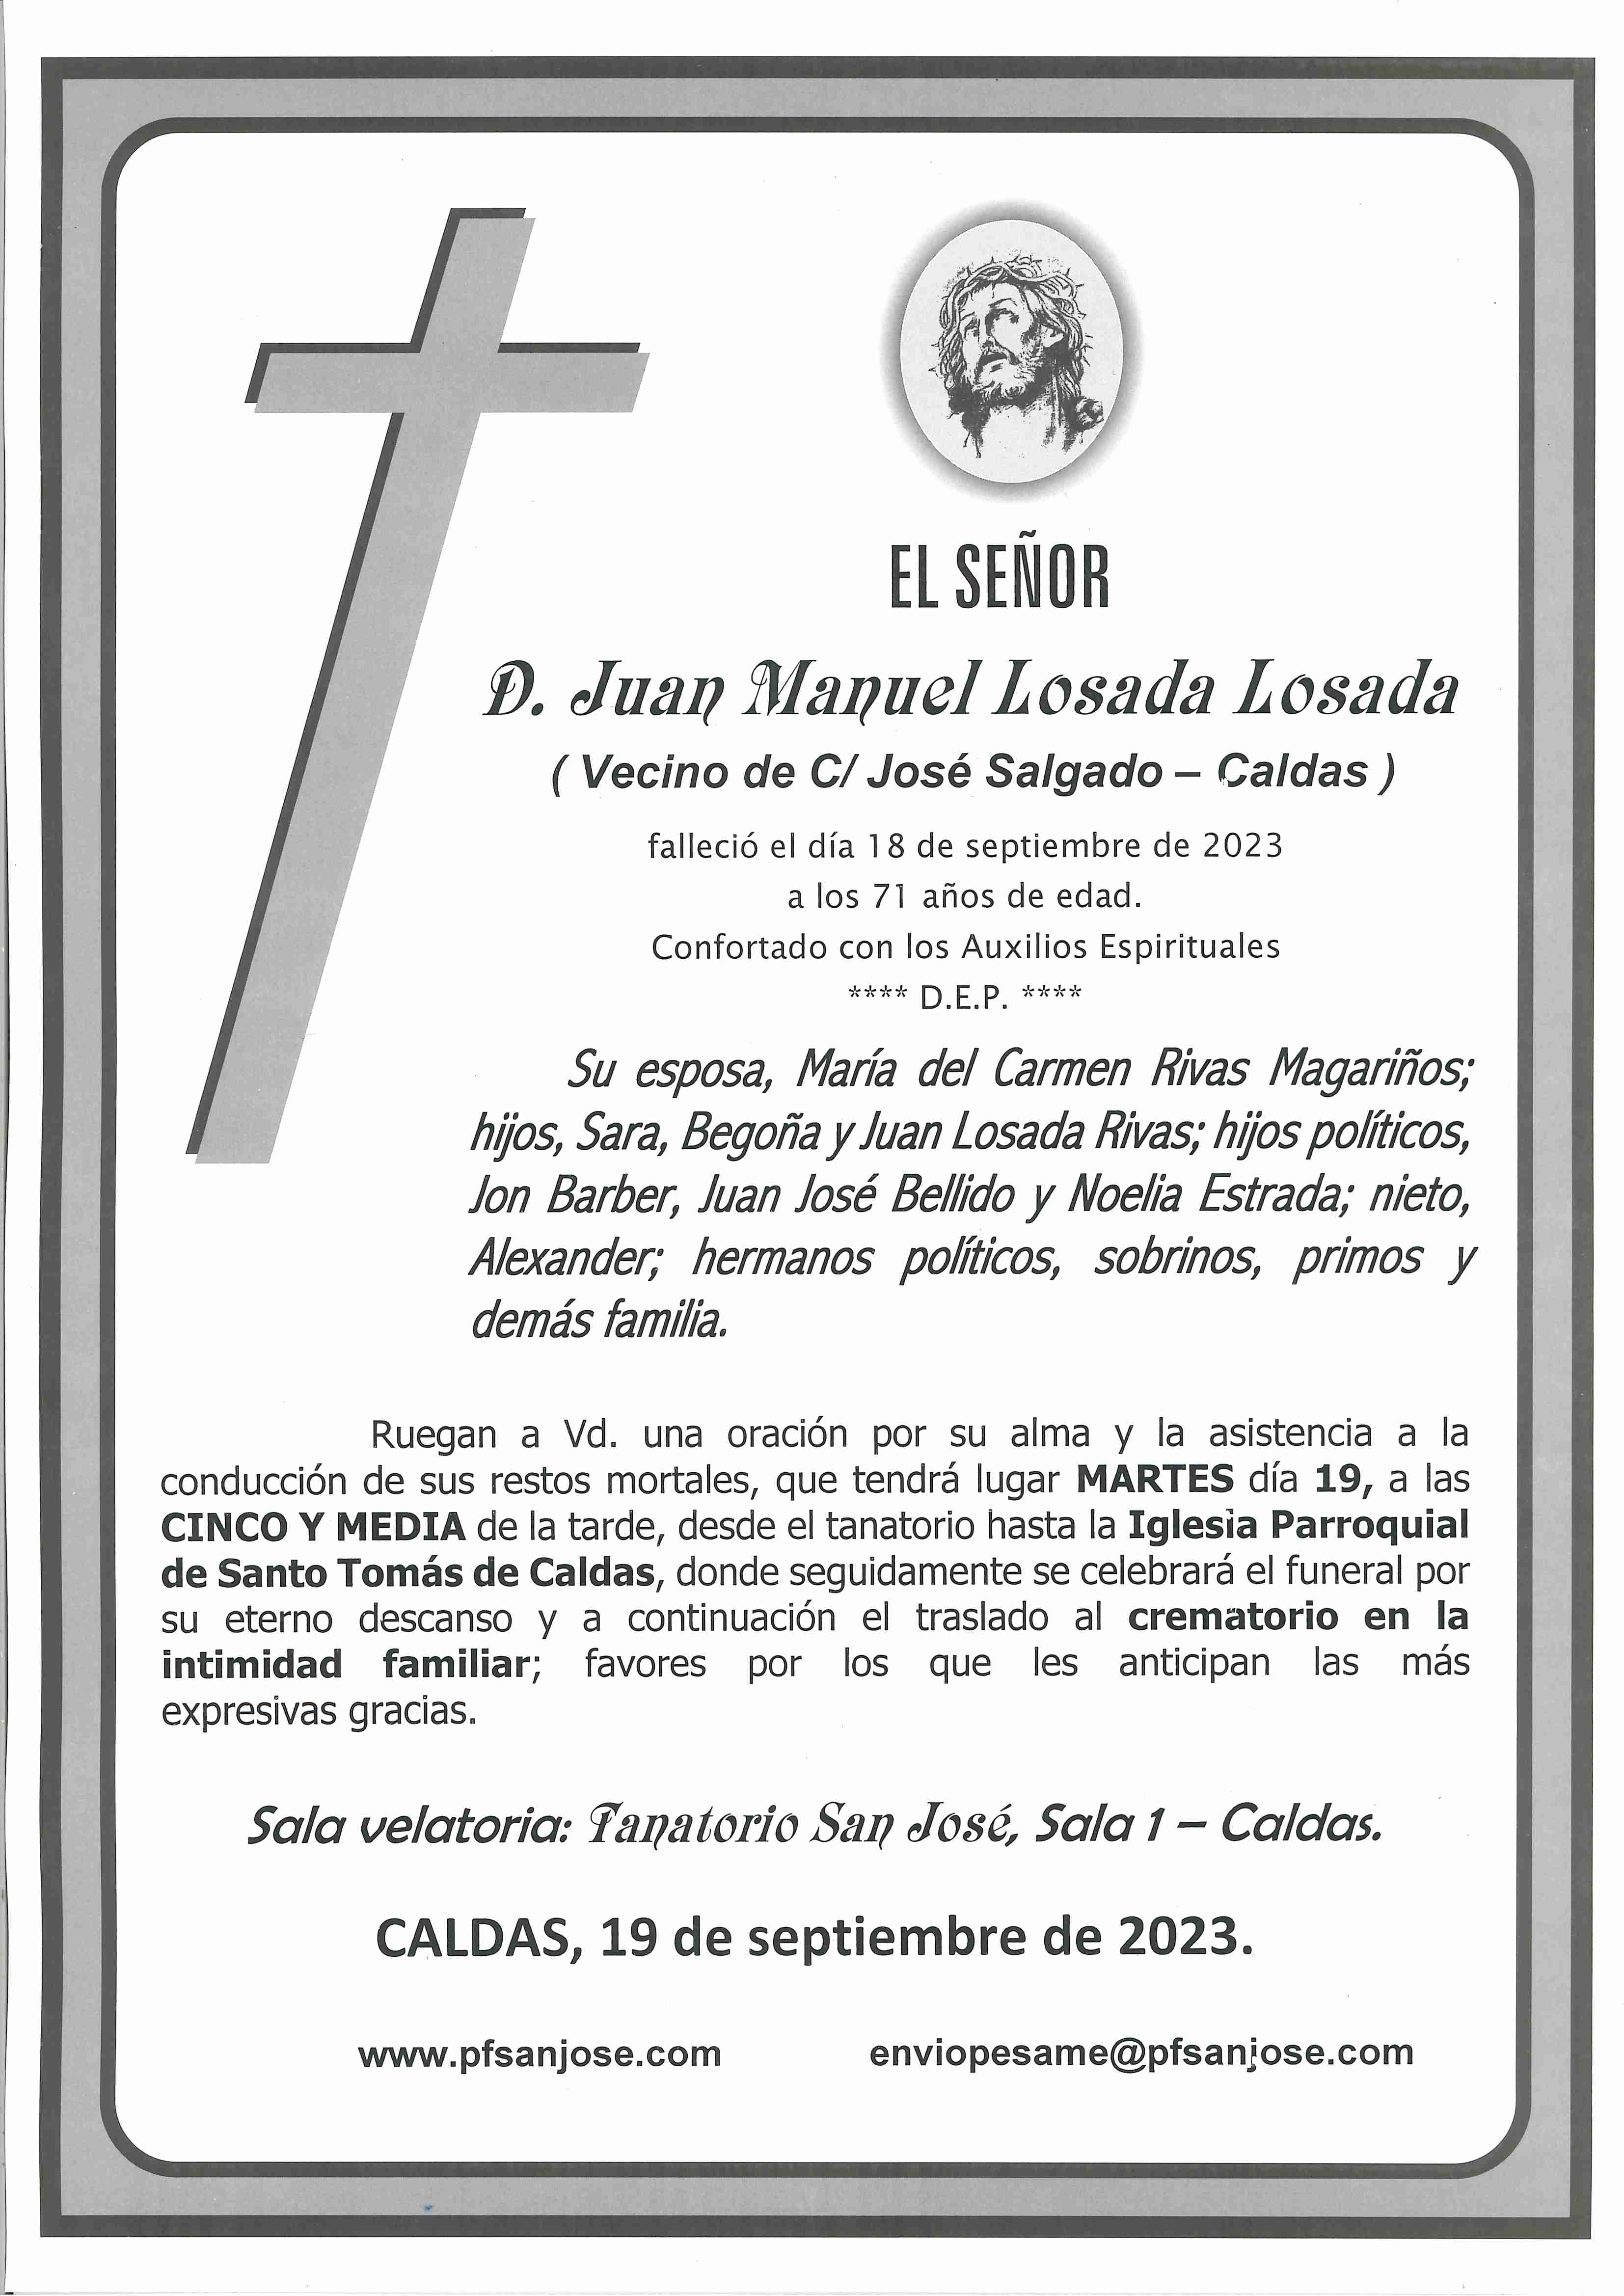 Juan Manuel Losada Losada